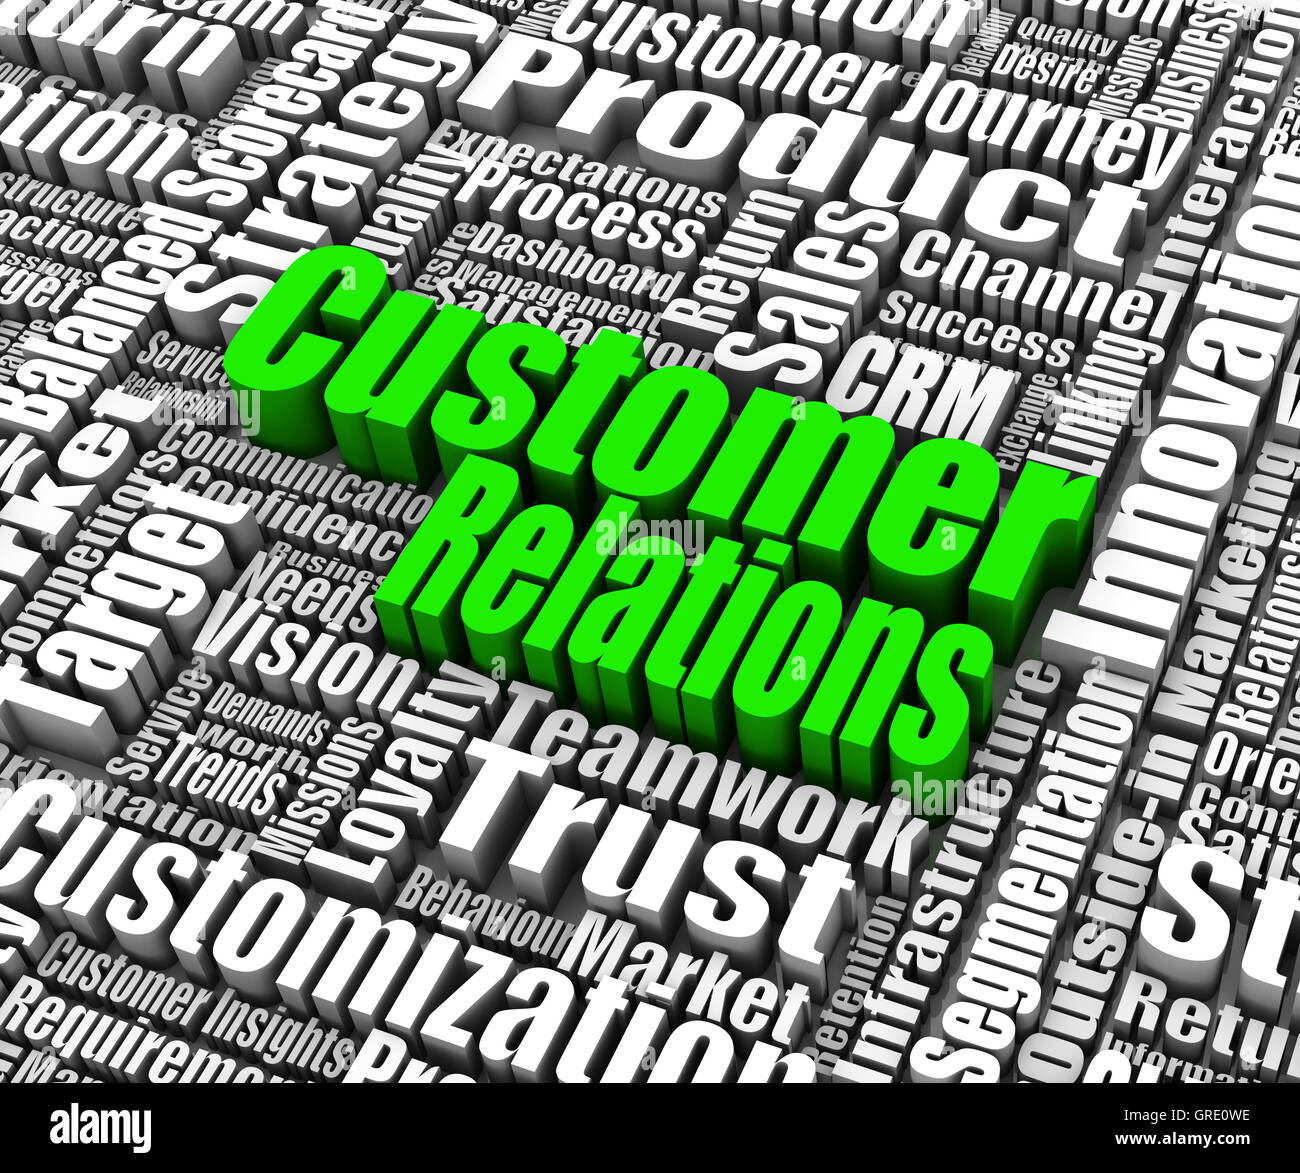 Customer Relations Stockfoto